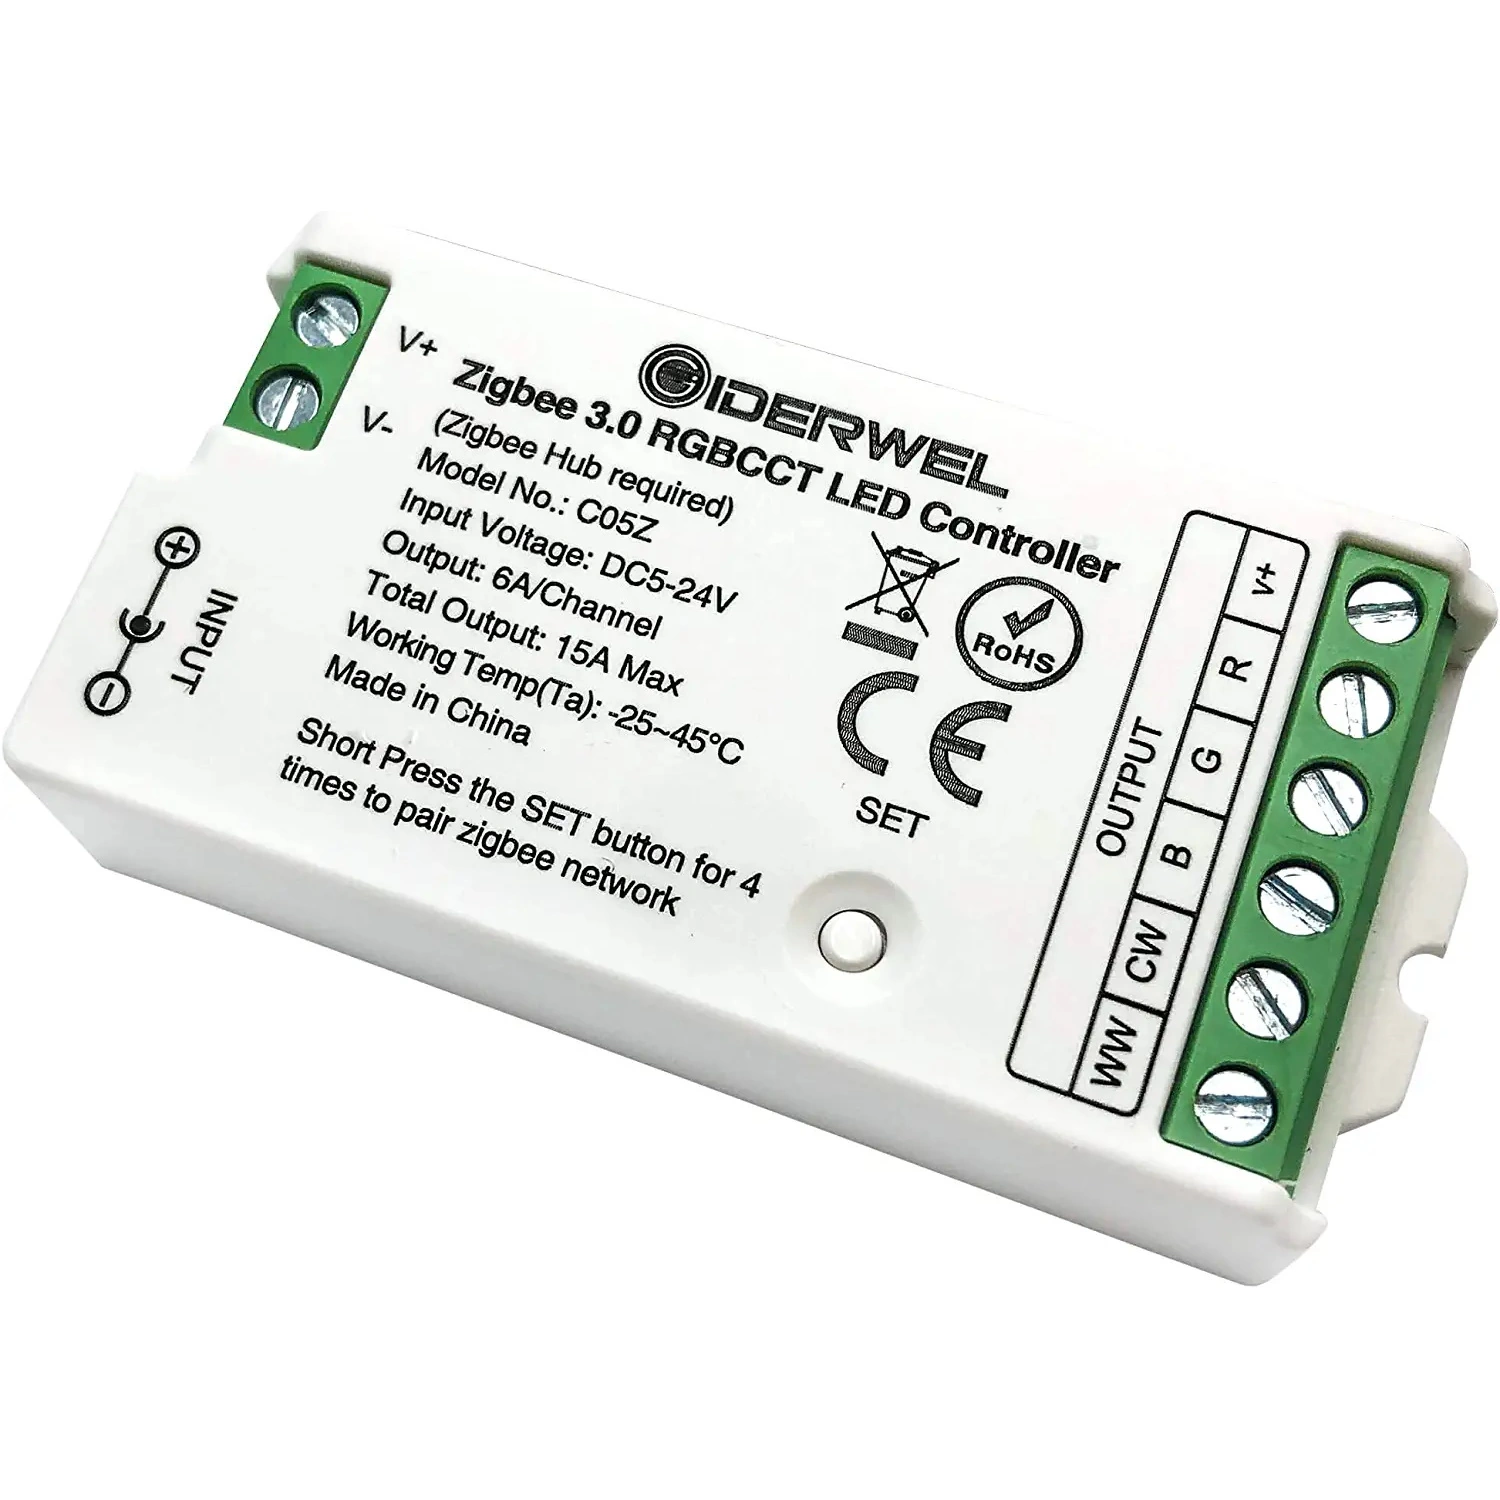 RGBCCT LED Controller